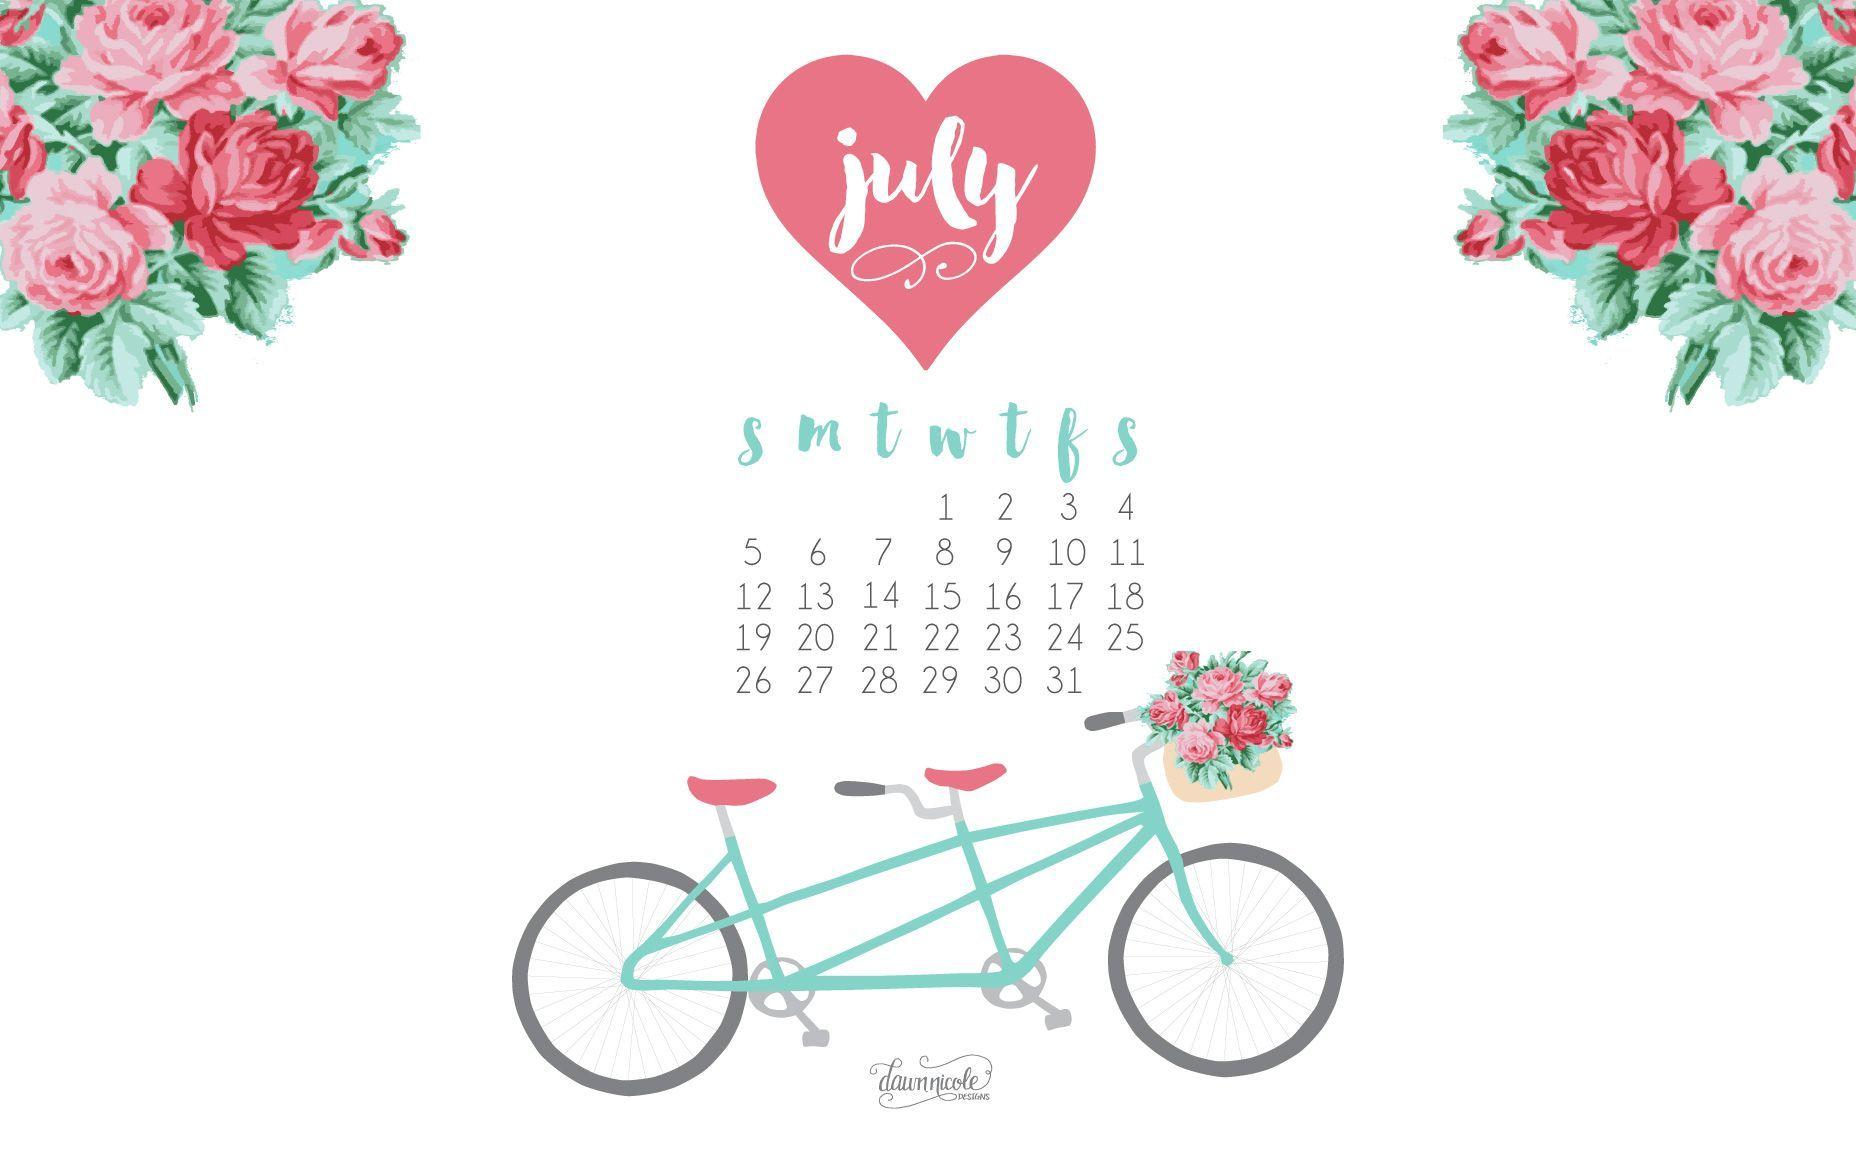 July 2016 Wallpaper With Calendar Monthly Calendar